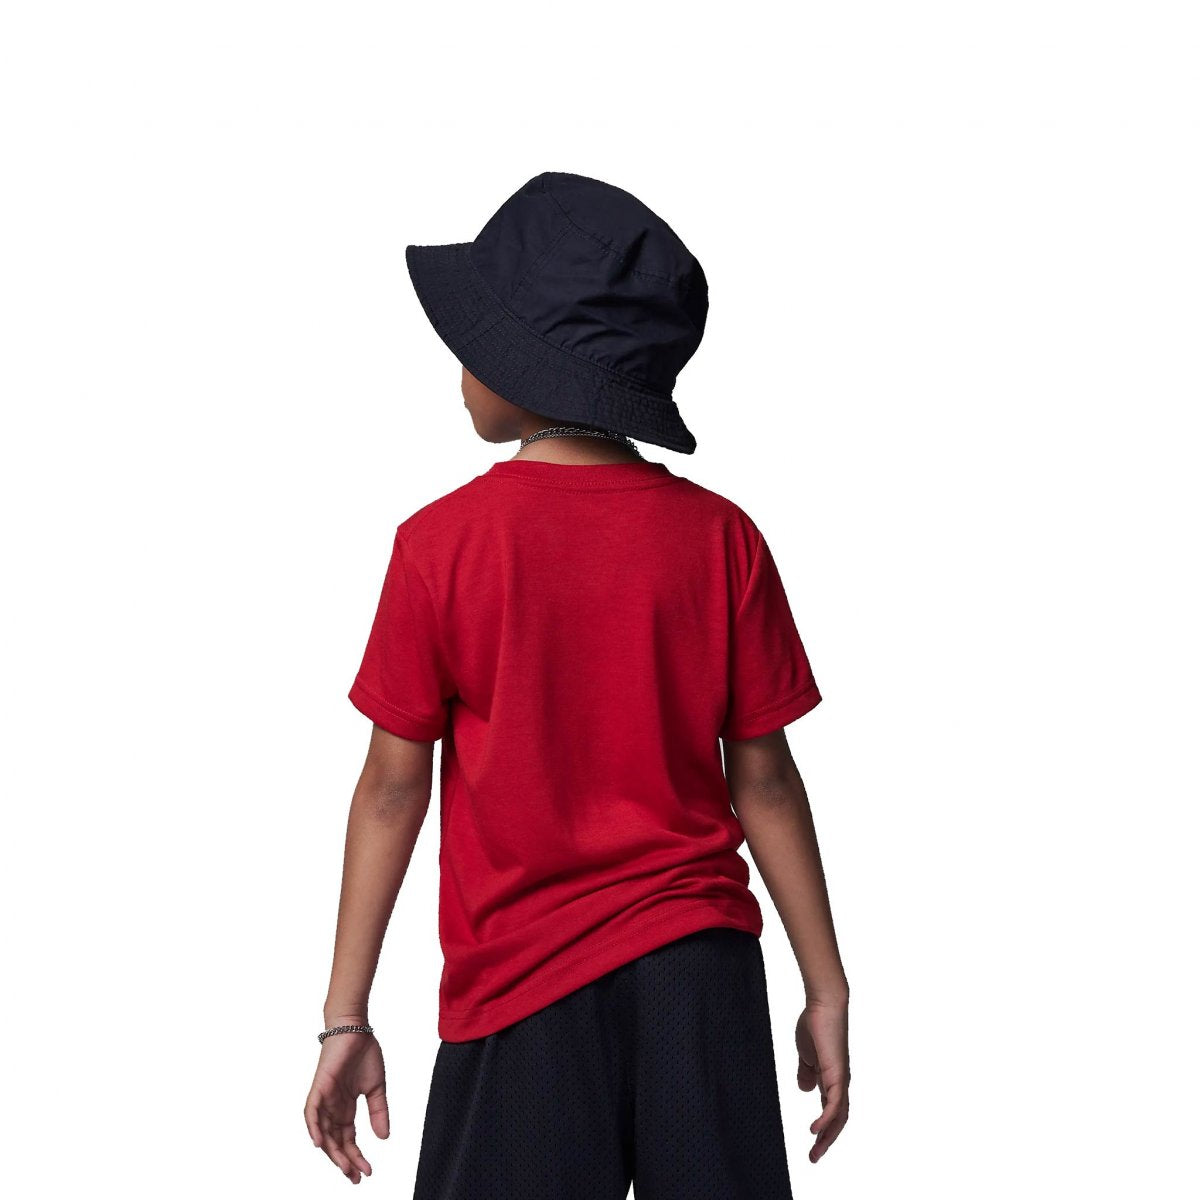 Jordan maglietta manica corta da ragazzo Jumpman 95B922-R78 rosso